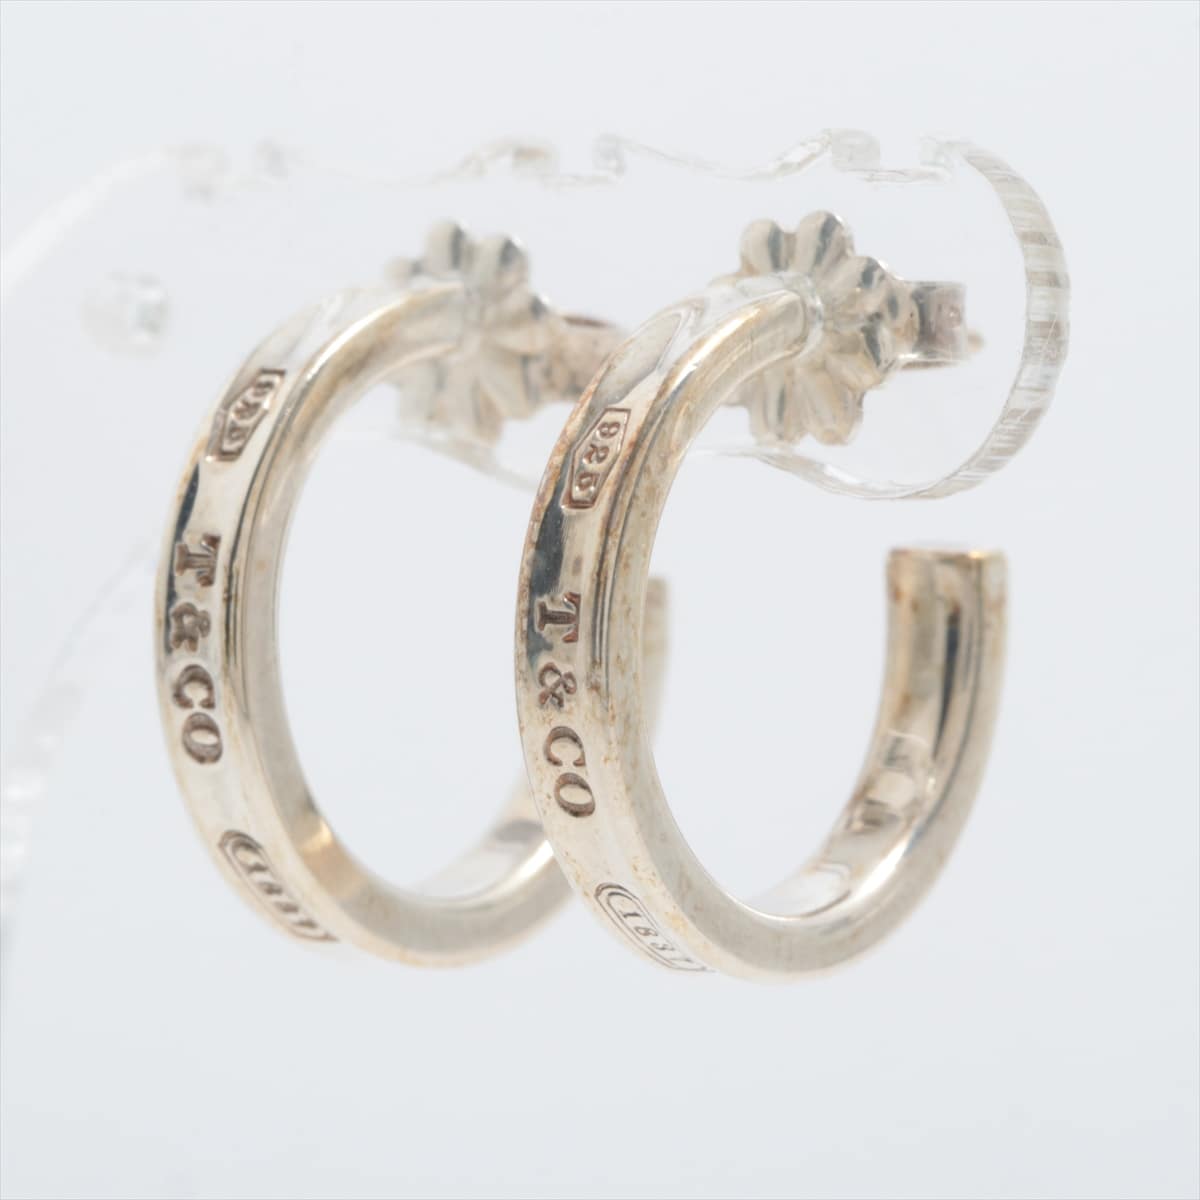 Tiffany 1837 Narrow Piercing jewelry (for both ears) 925 4.3g Silver